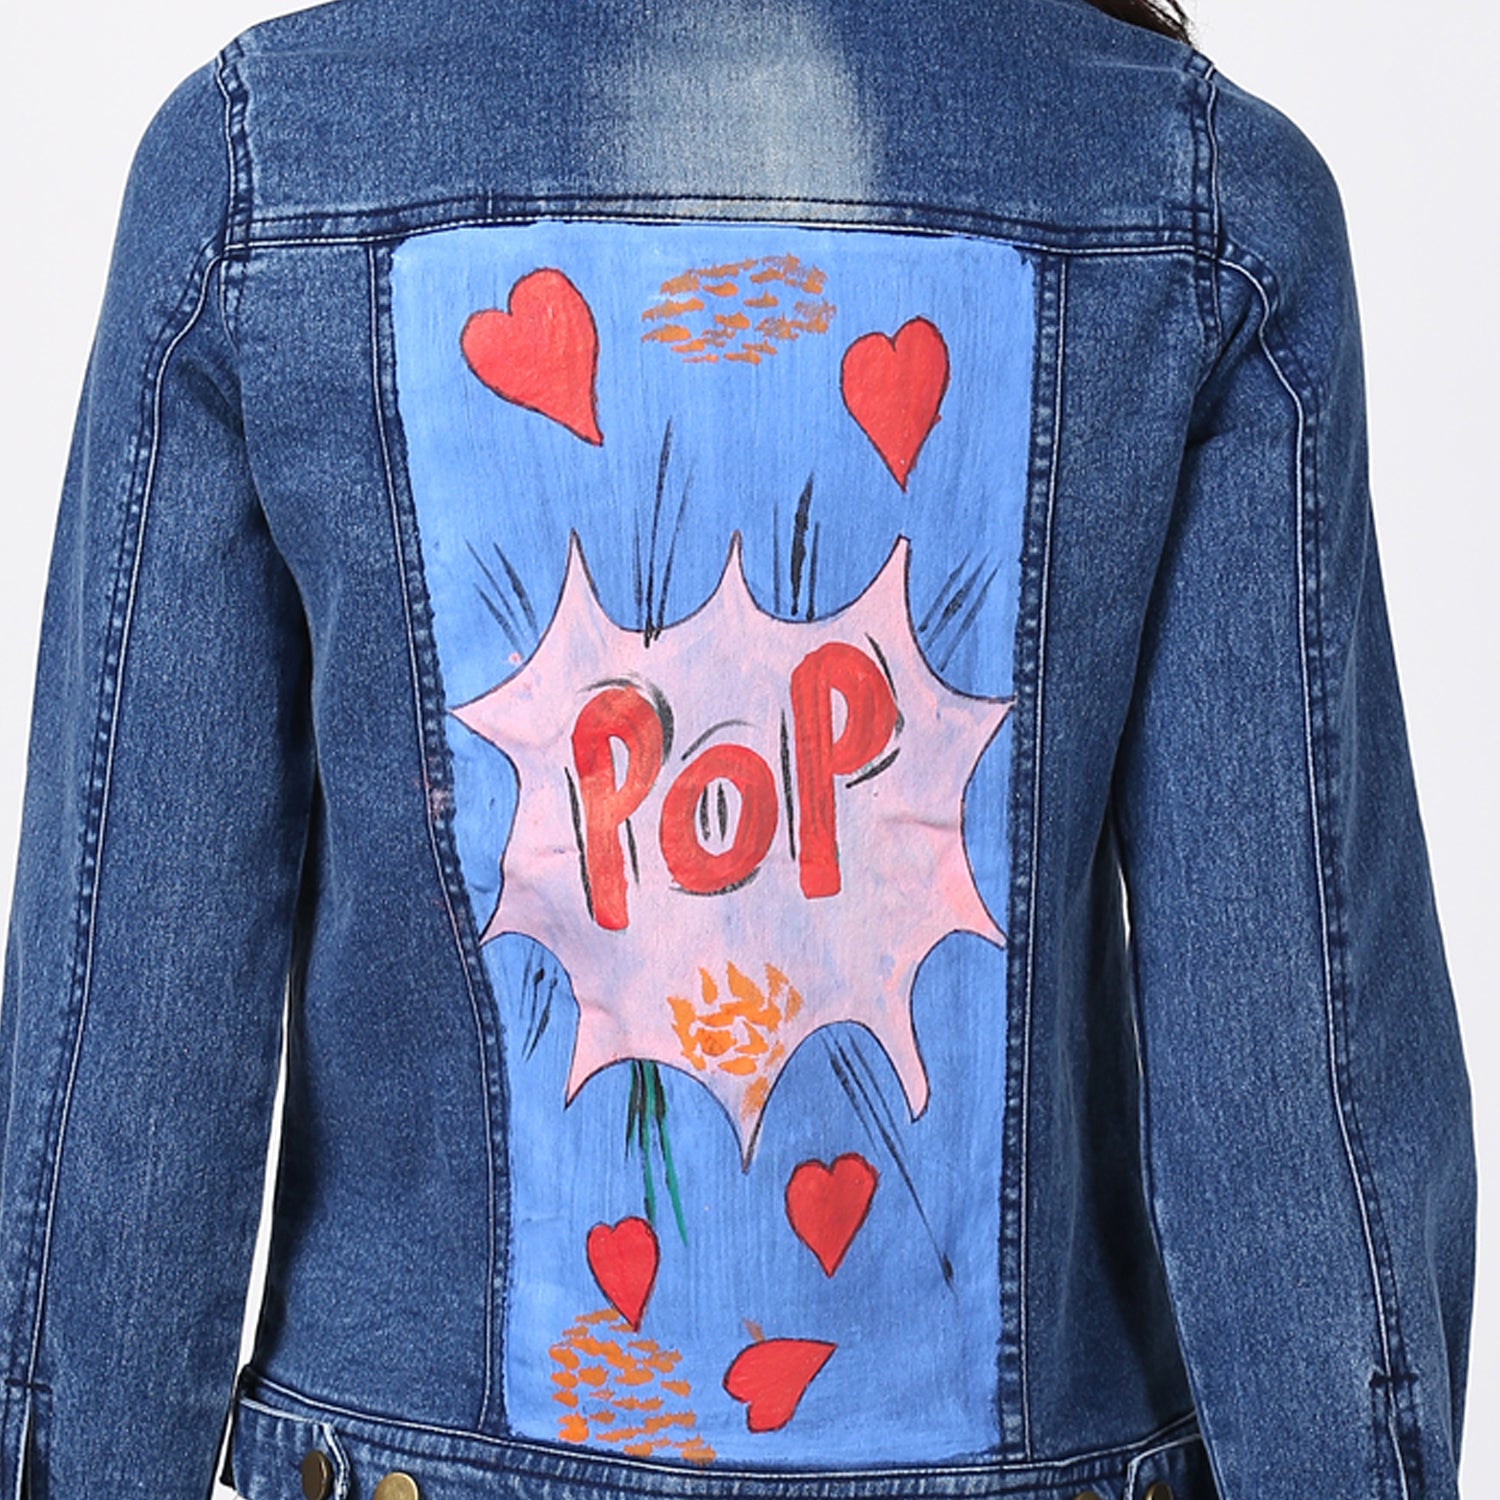 Women's Hand Painted Denim Jacket -Pop - StyleStone